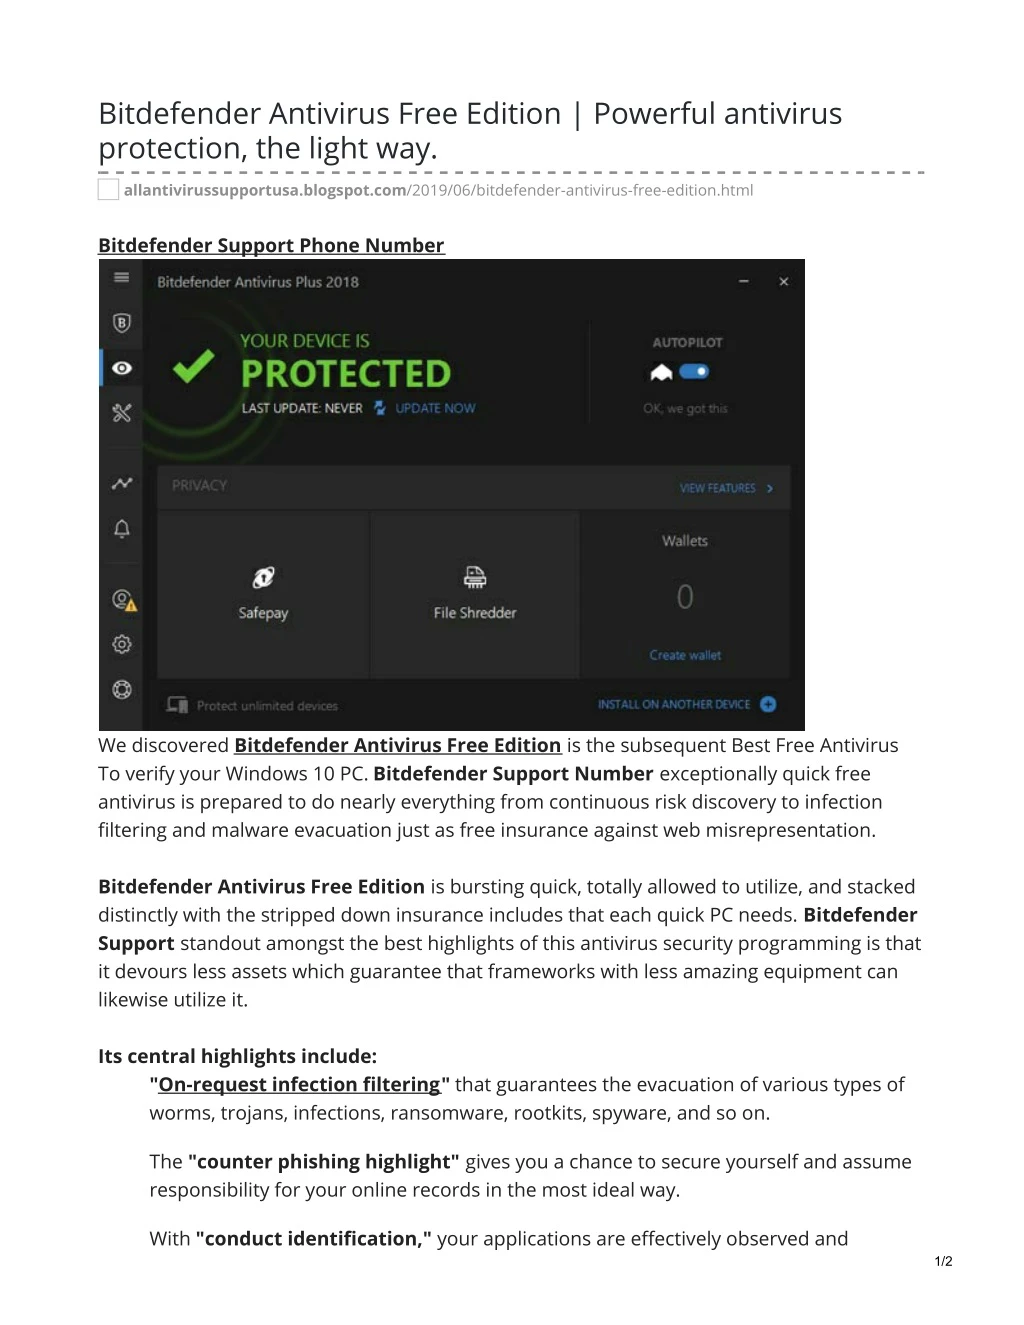 bitdefender antivirus free edition powerful